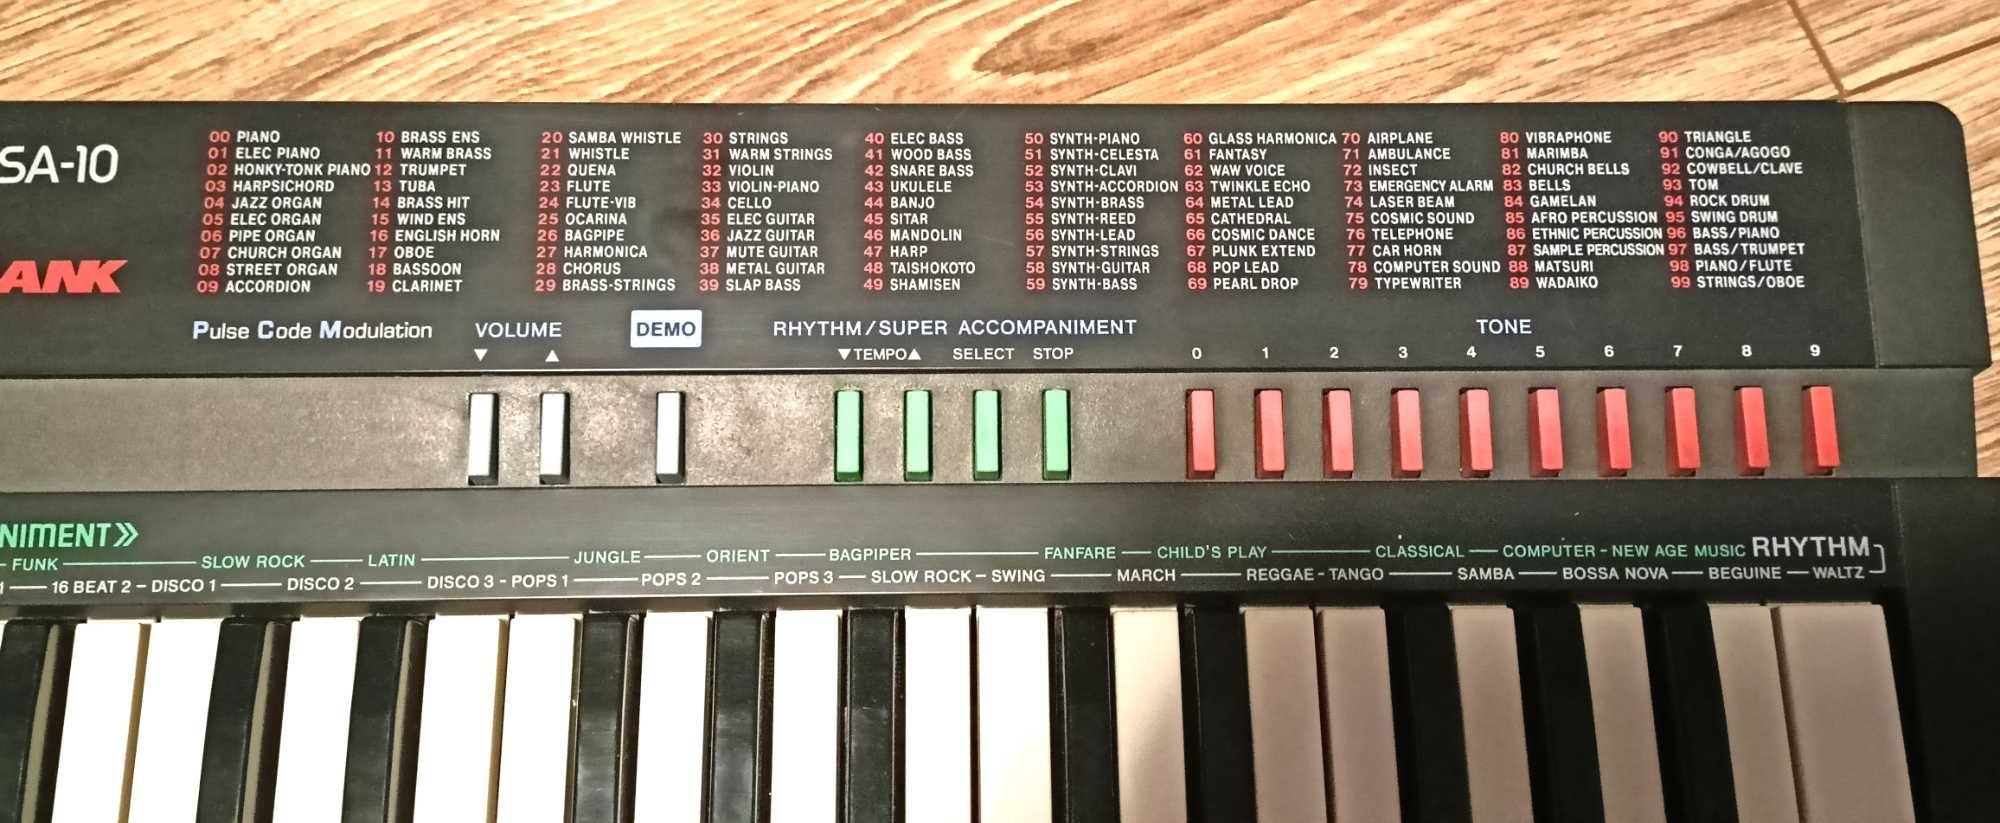 Organki keyboard Casio Sa-10